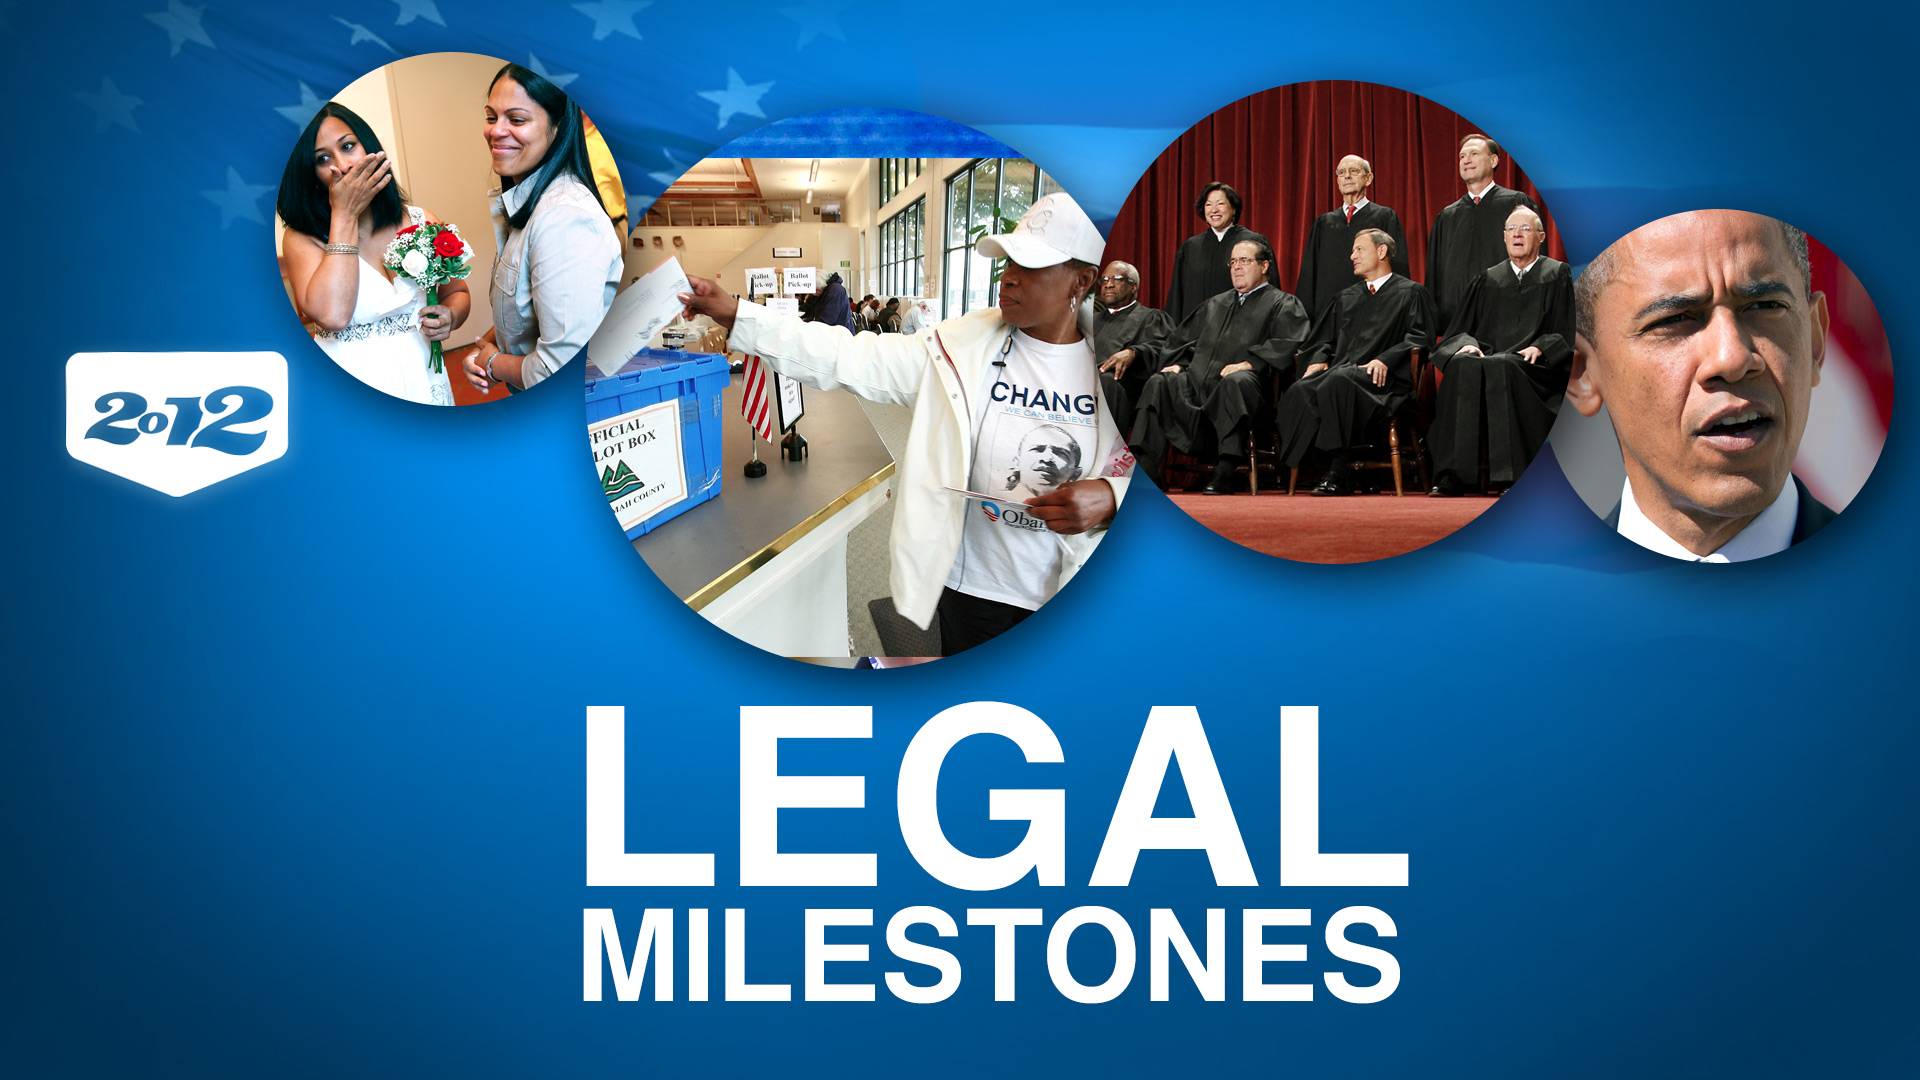 2012 Legal Milestones of the Year